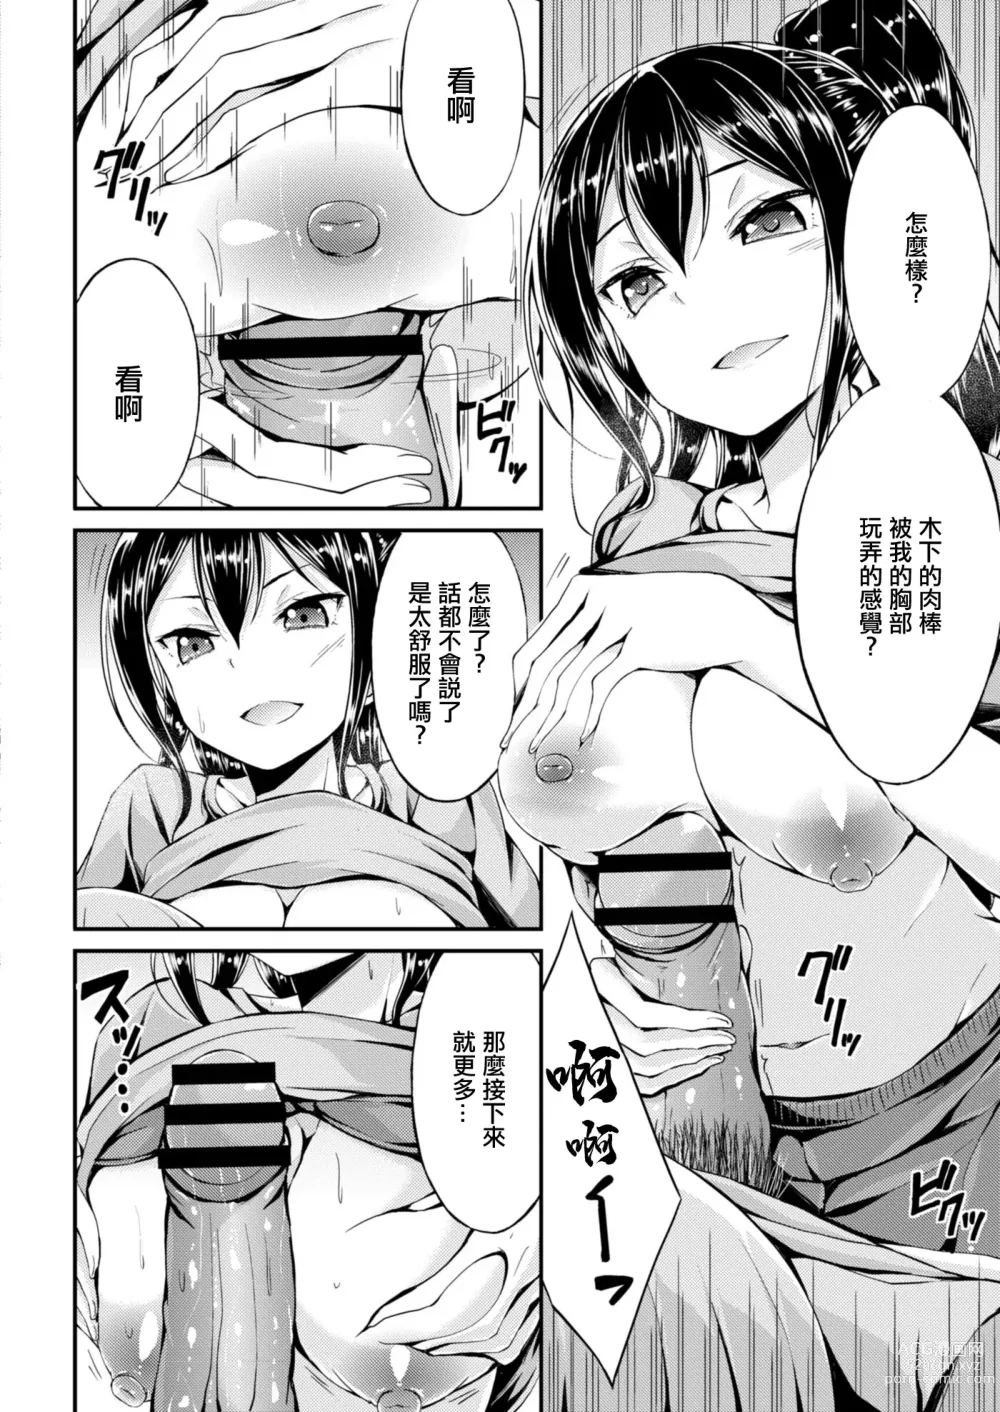 Page 6 of manga 秘密的後輩指導